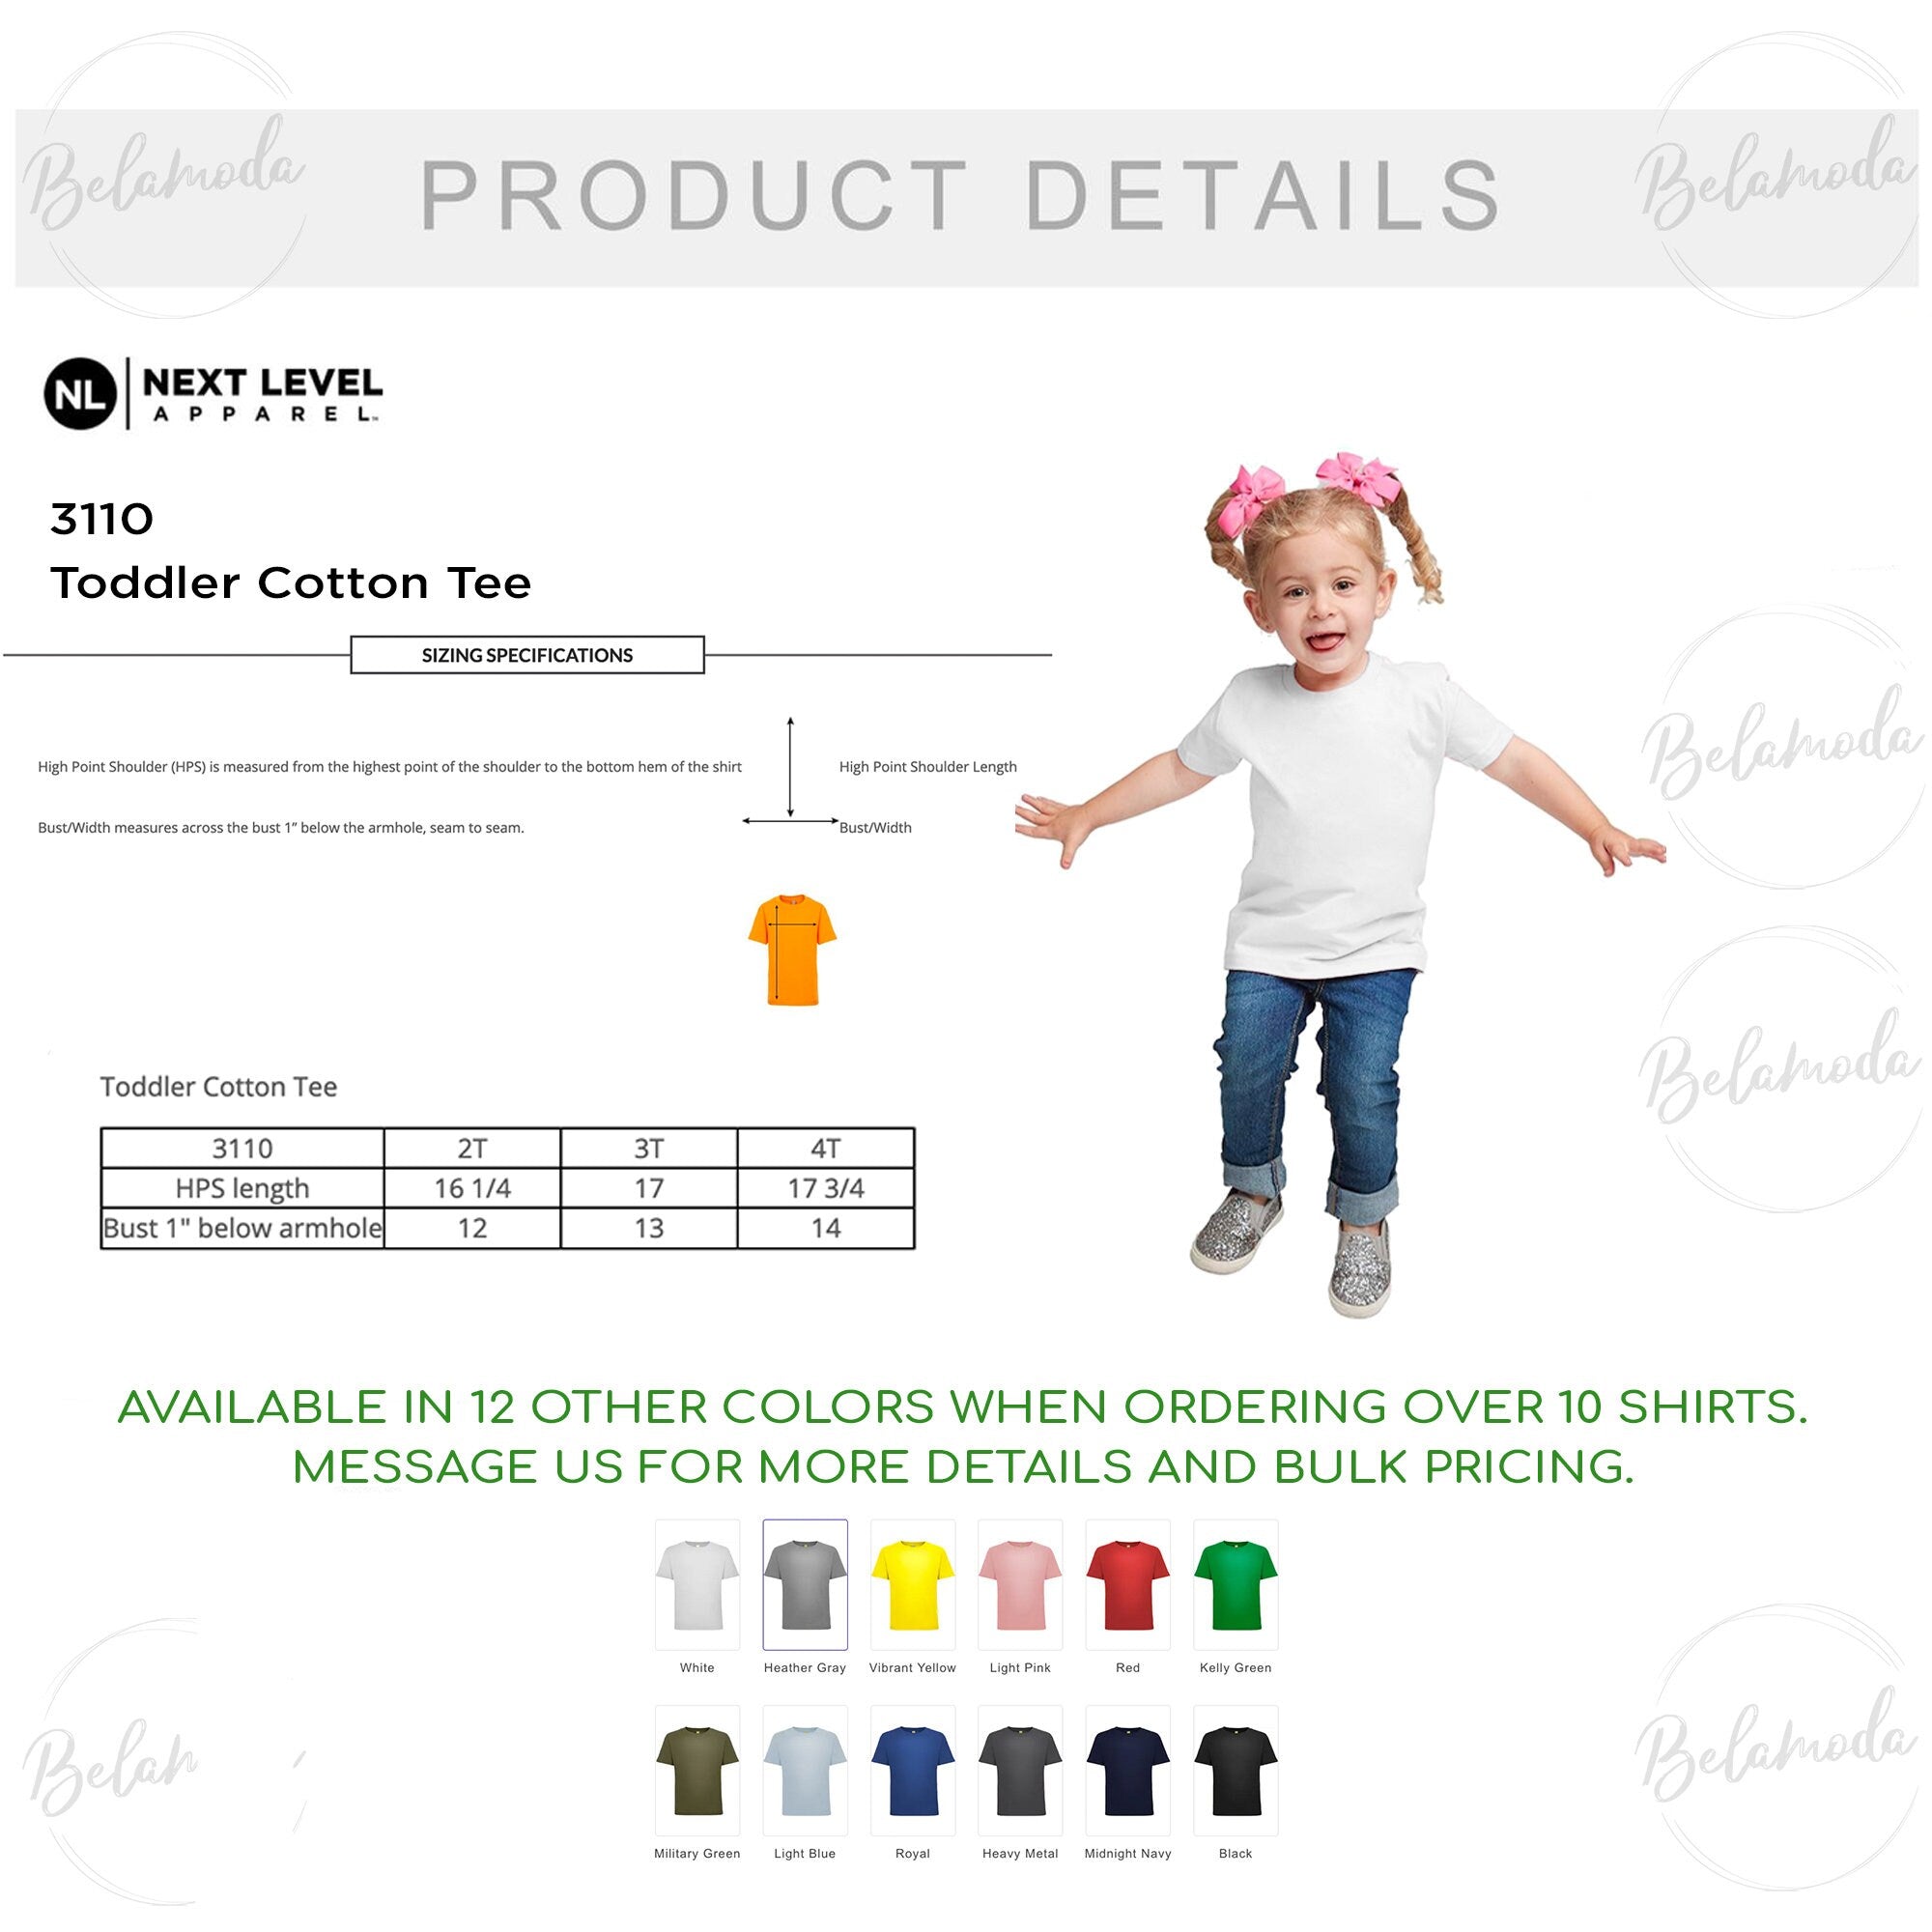 Kid's Custom Shirt, Children's Custom Shirts, Toddler Custom Shirts, Youth Custom Shirts, Custom Shirts, Custom T-Shirts, Custom Kid's Tee